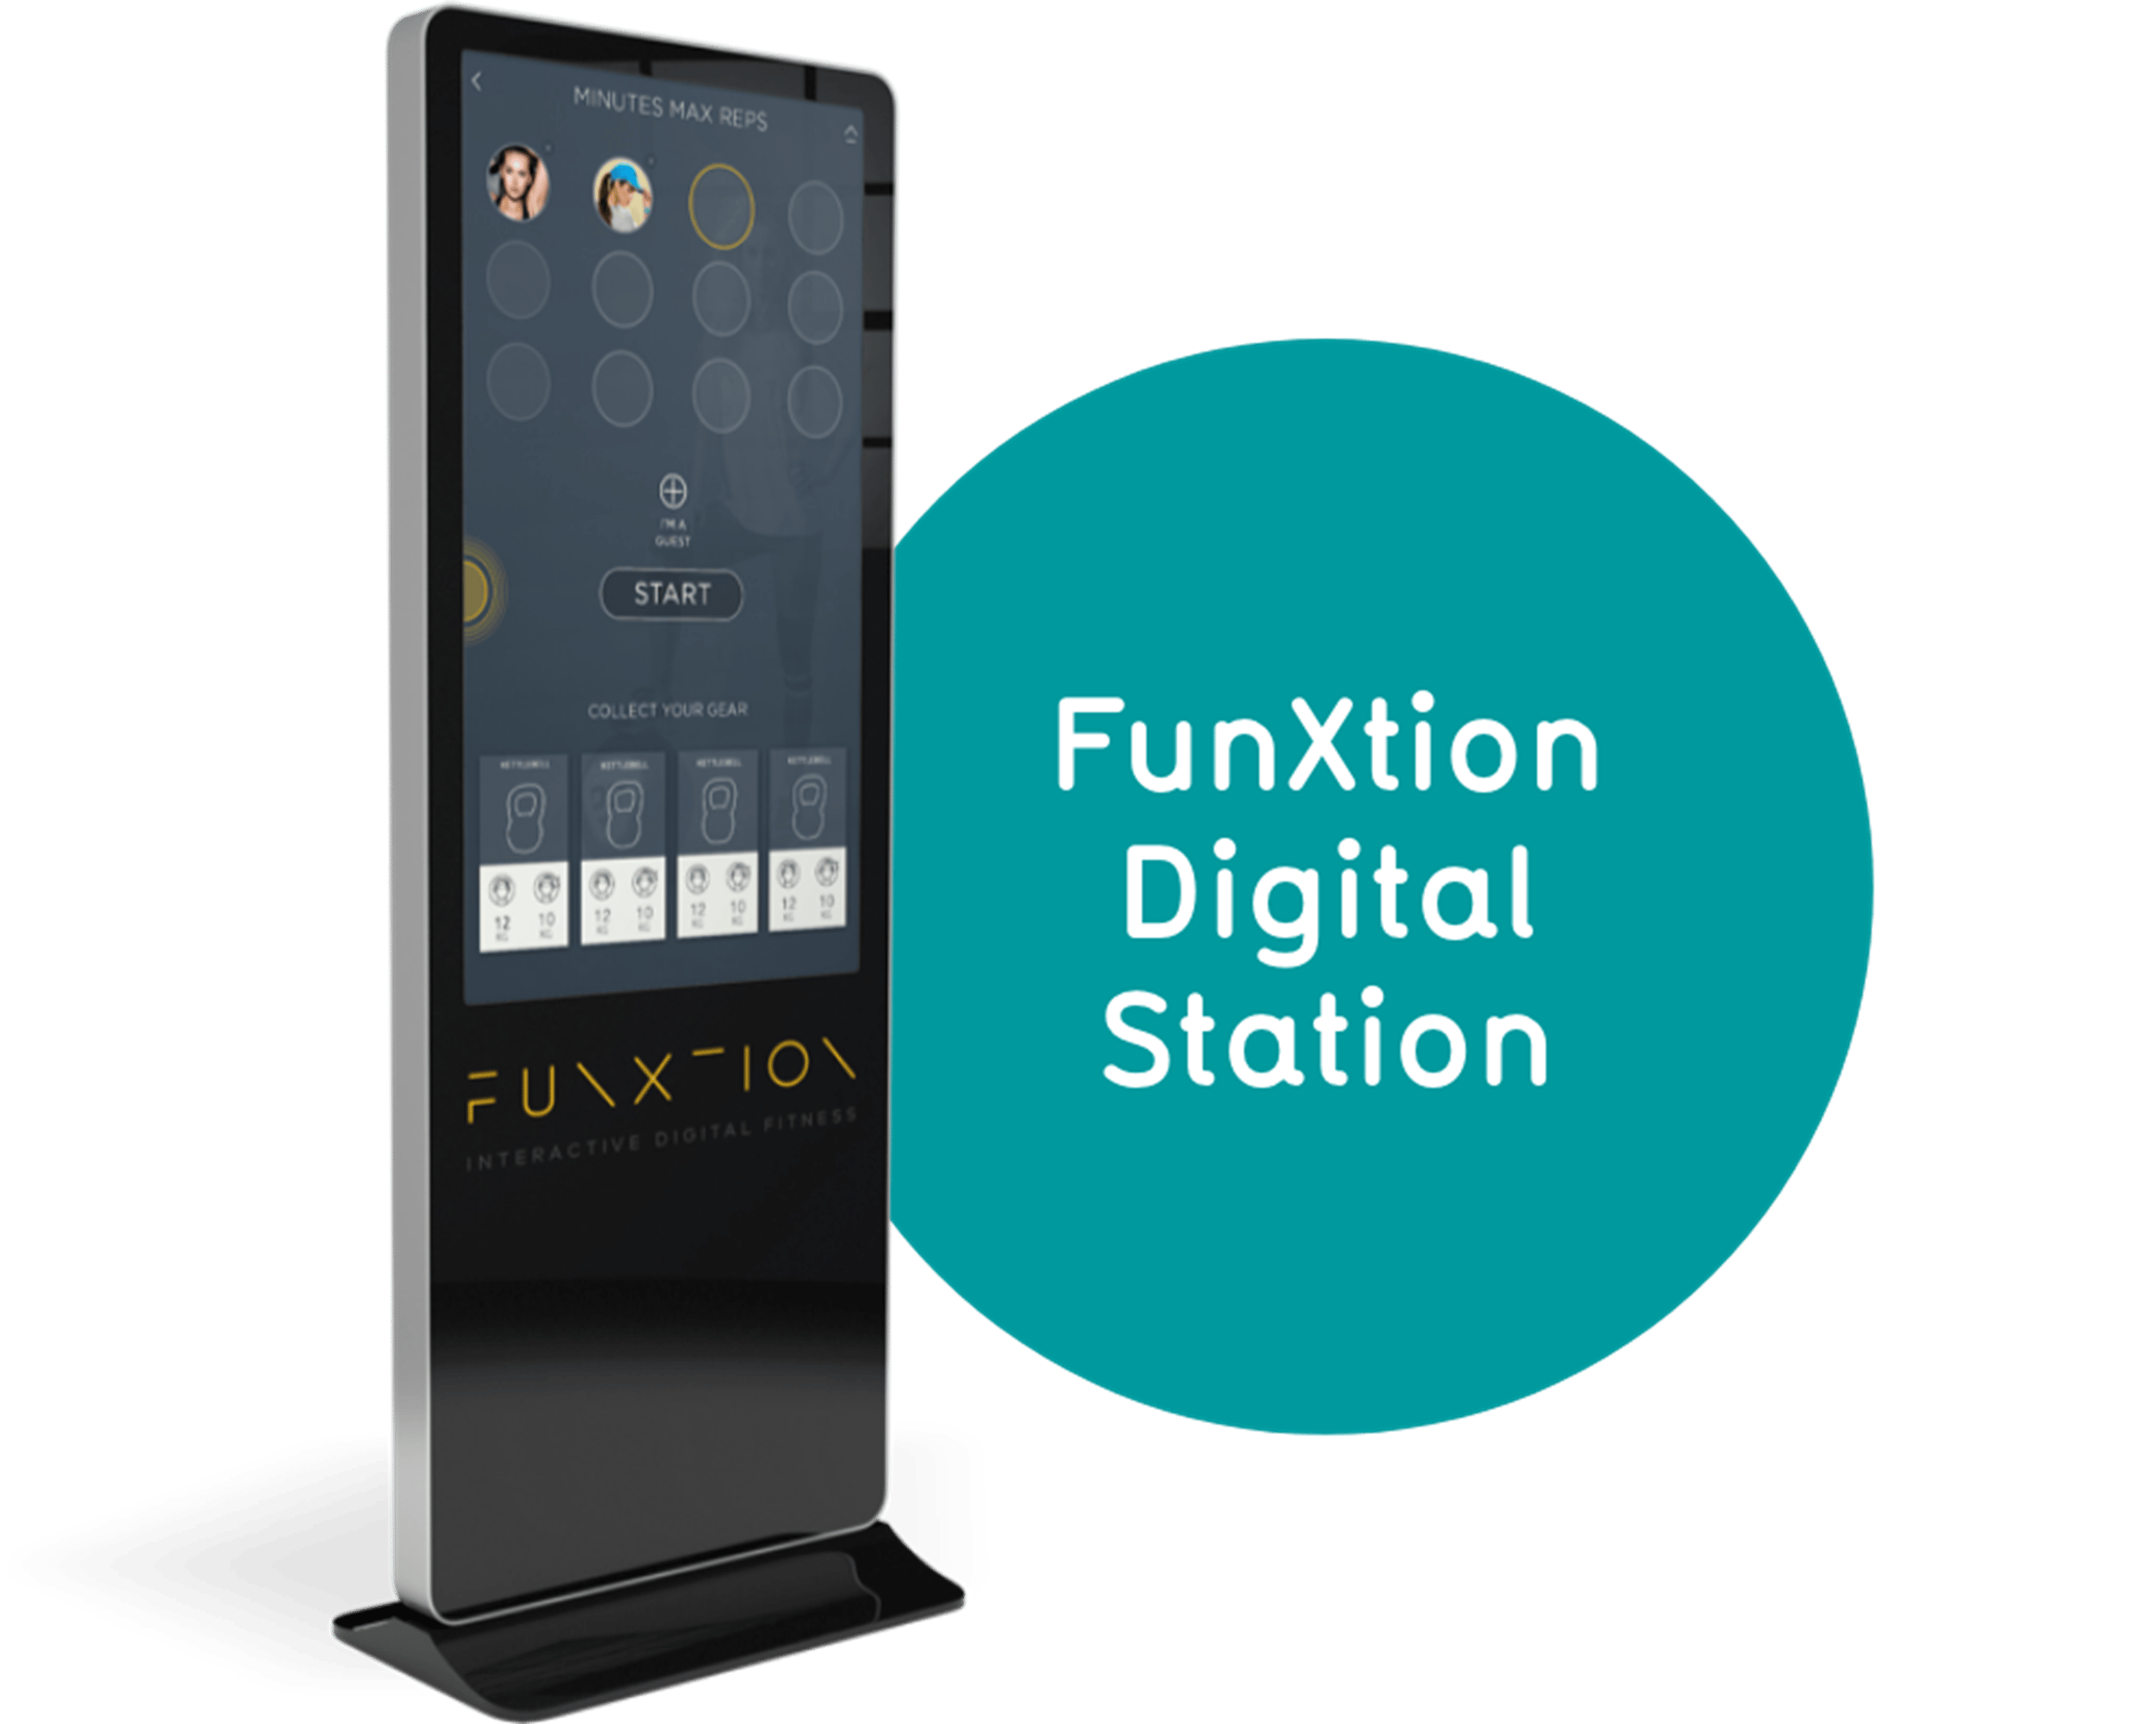 FunXtional Digital Station